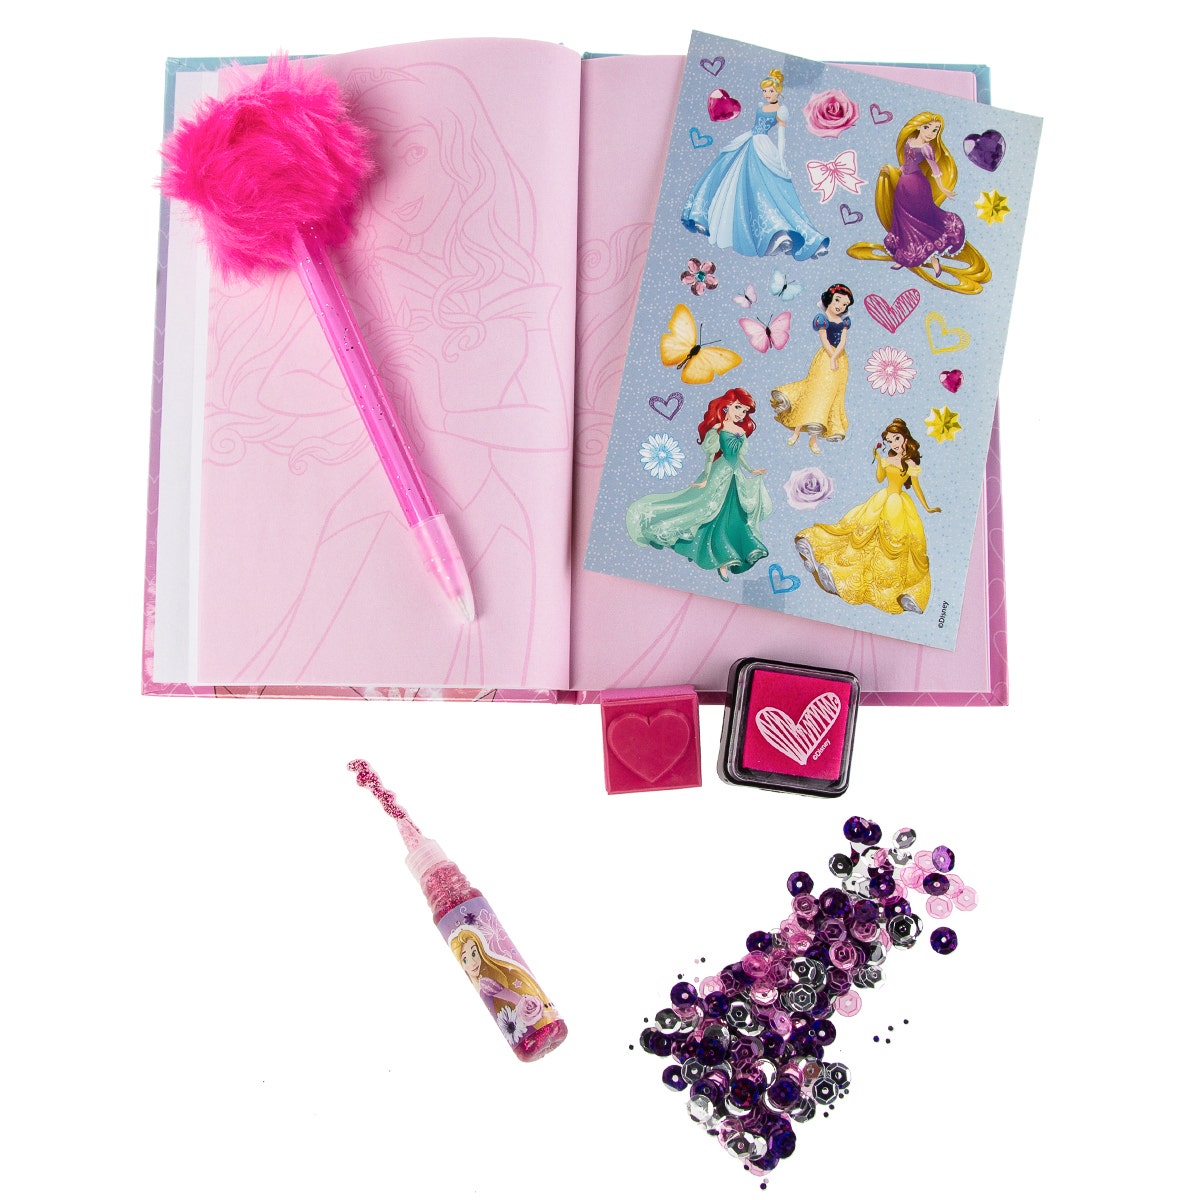 DISNEY PRINCESS Stationery Set Girls Kids Diary Journal w Pen and